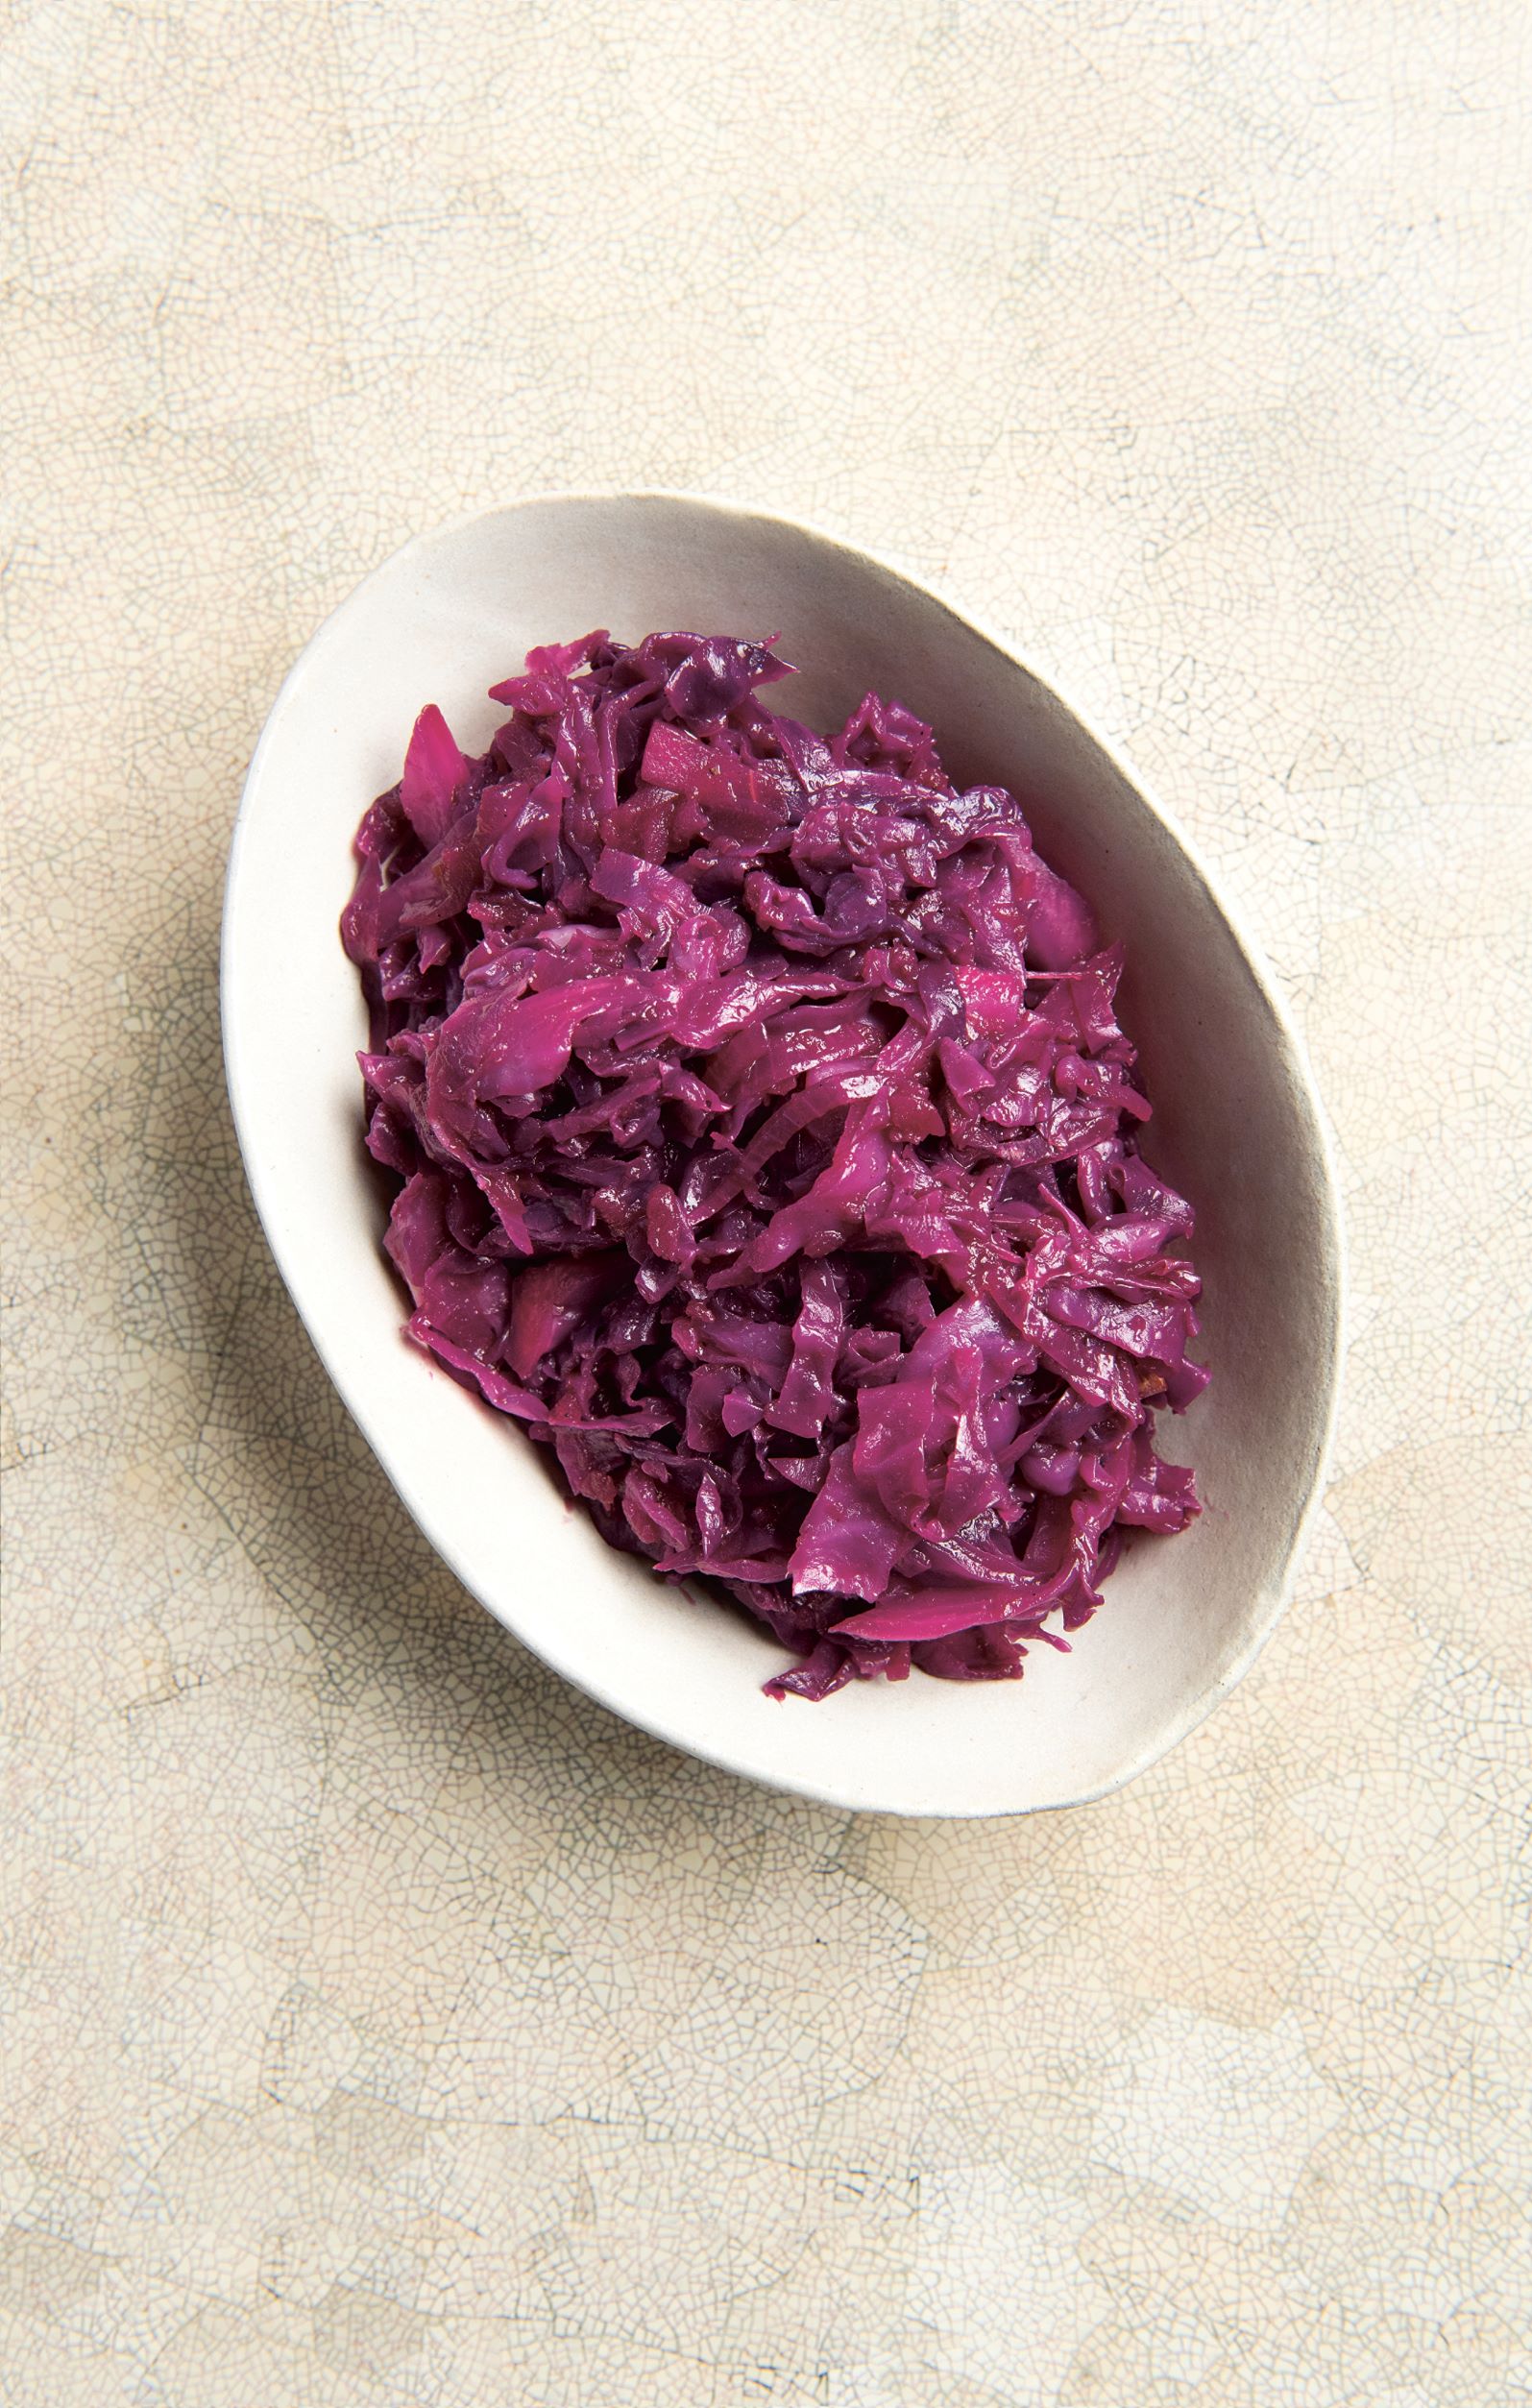 Braised red cabbage - The Jewish Cookbook